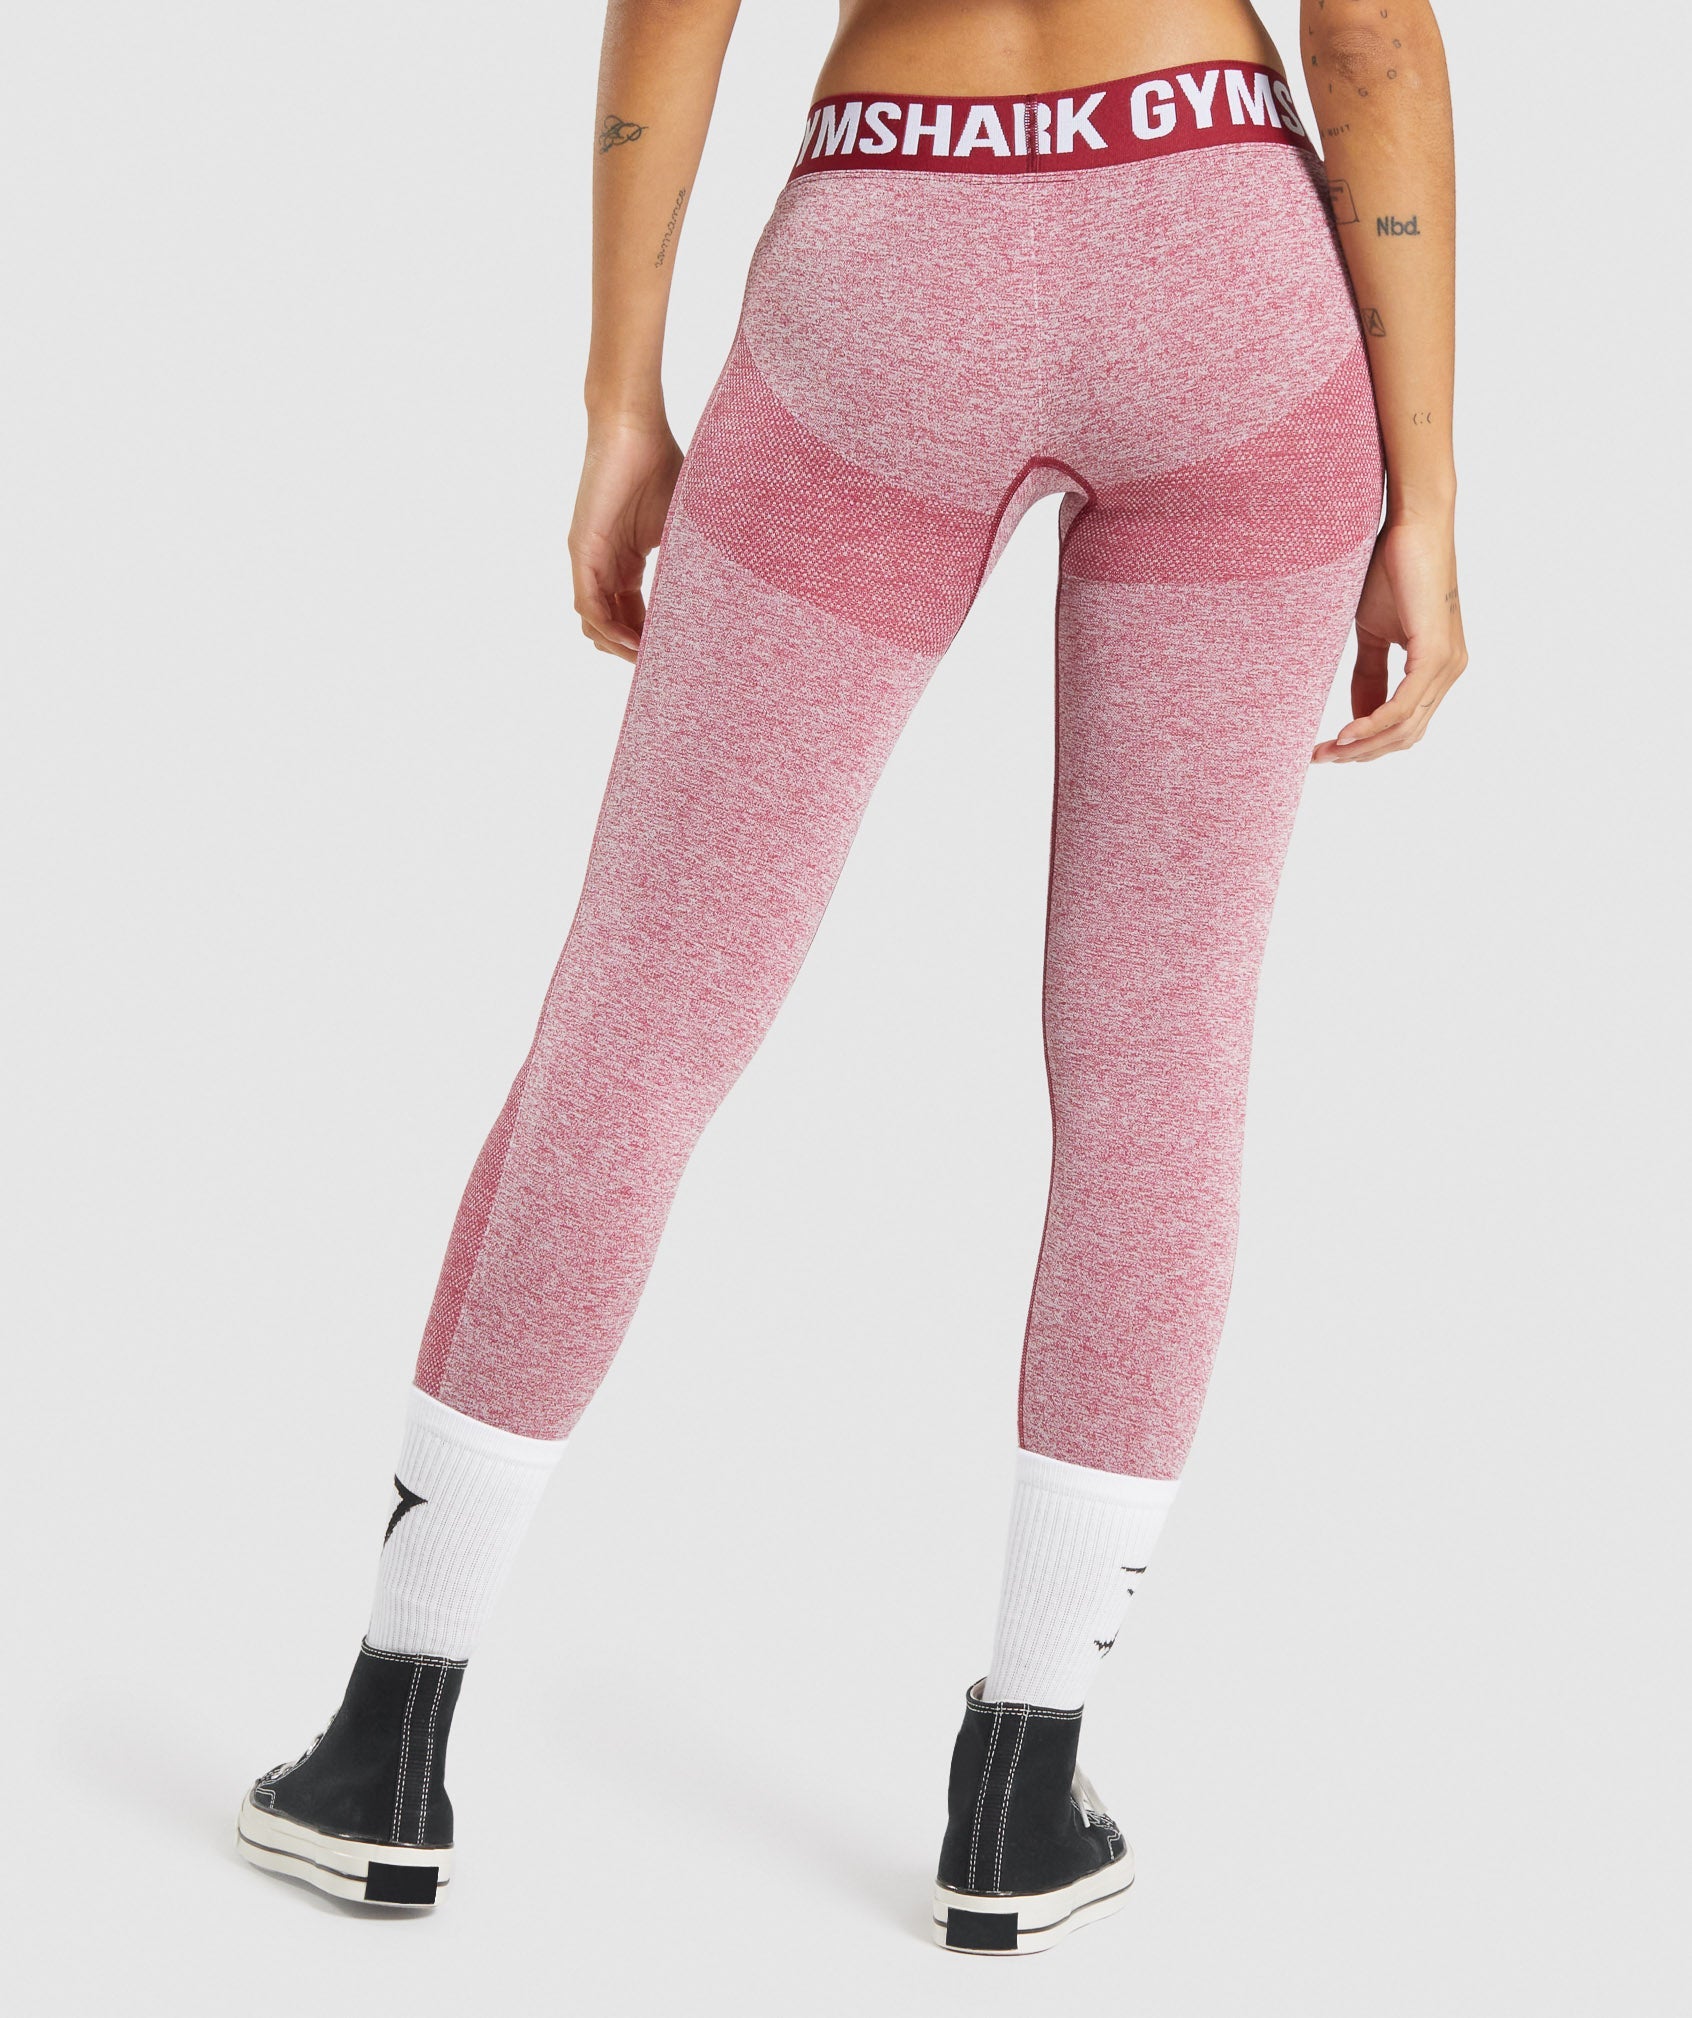 Gymshark flex leggings beet marl/chalk pink size XS